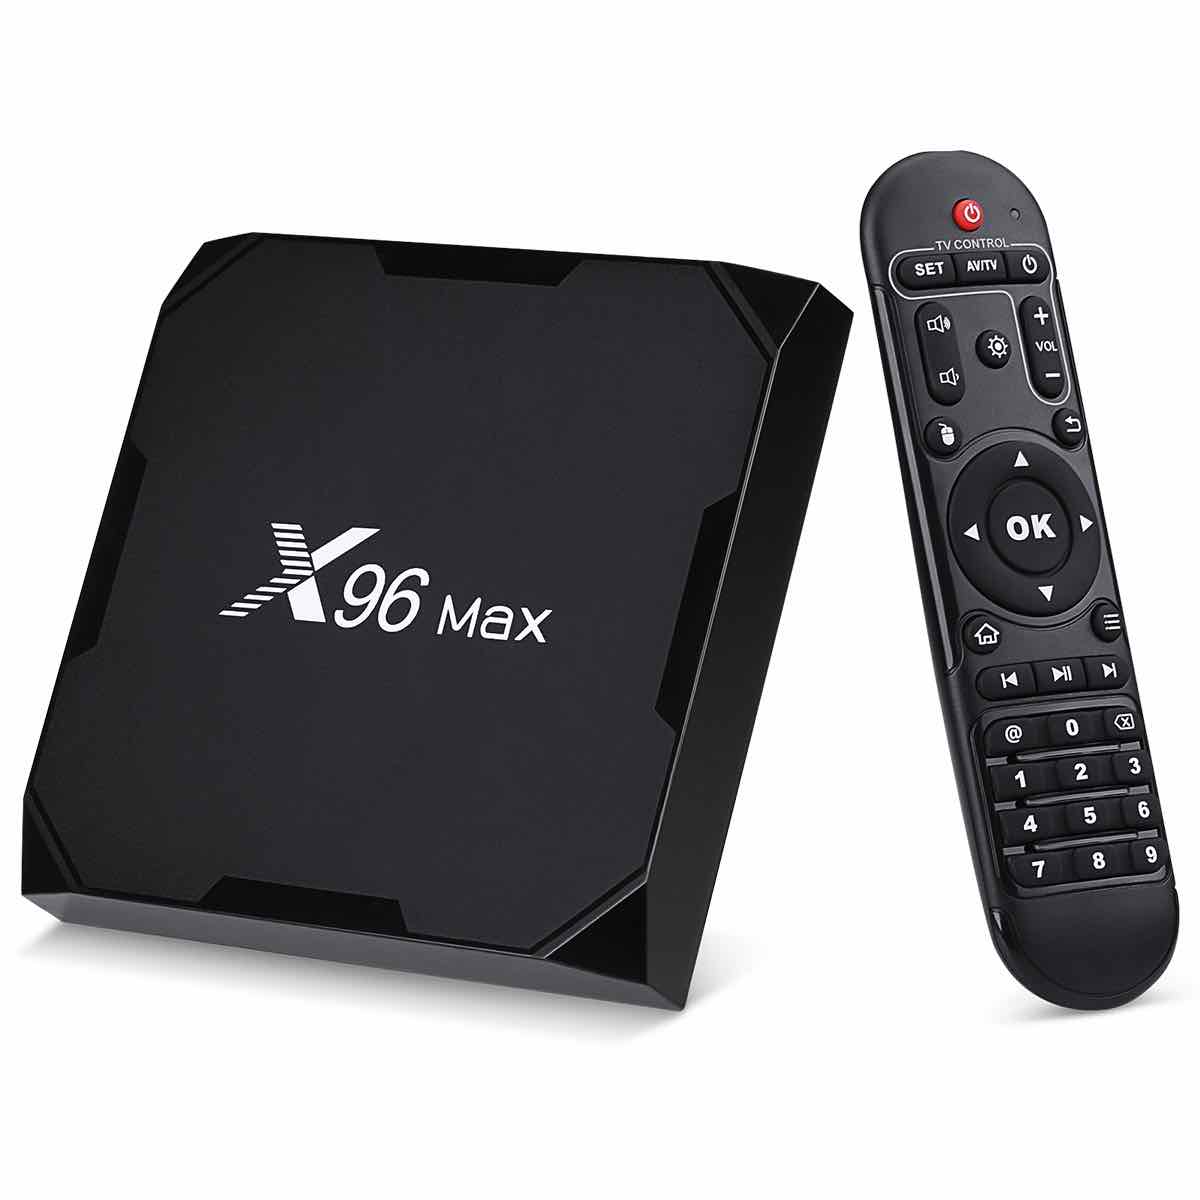 Андроид приставка маркет. Smart TV Box x96 Max. Смарт приставка x96 Max Plus. Смарт приставка x96max+4/32gb. Android приставка x96 Max.